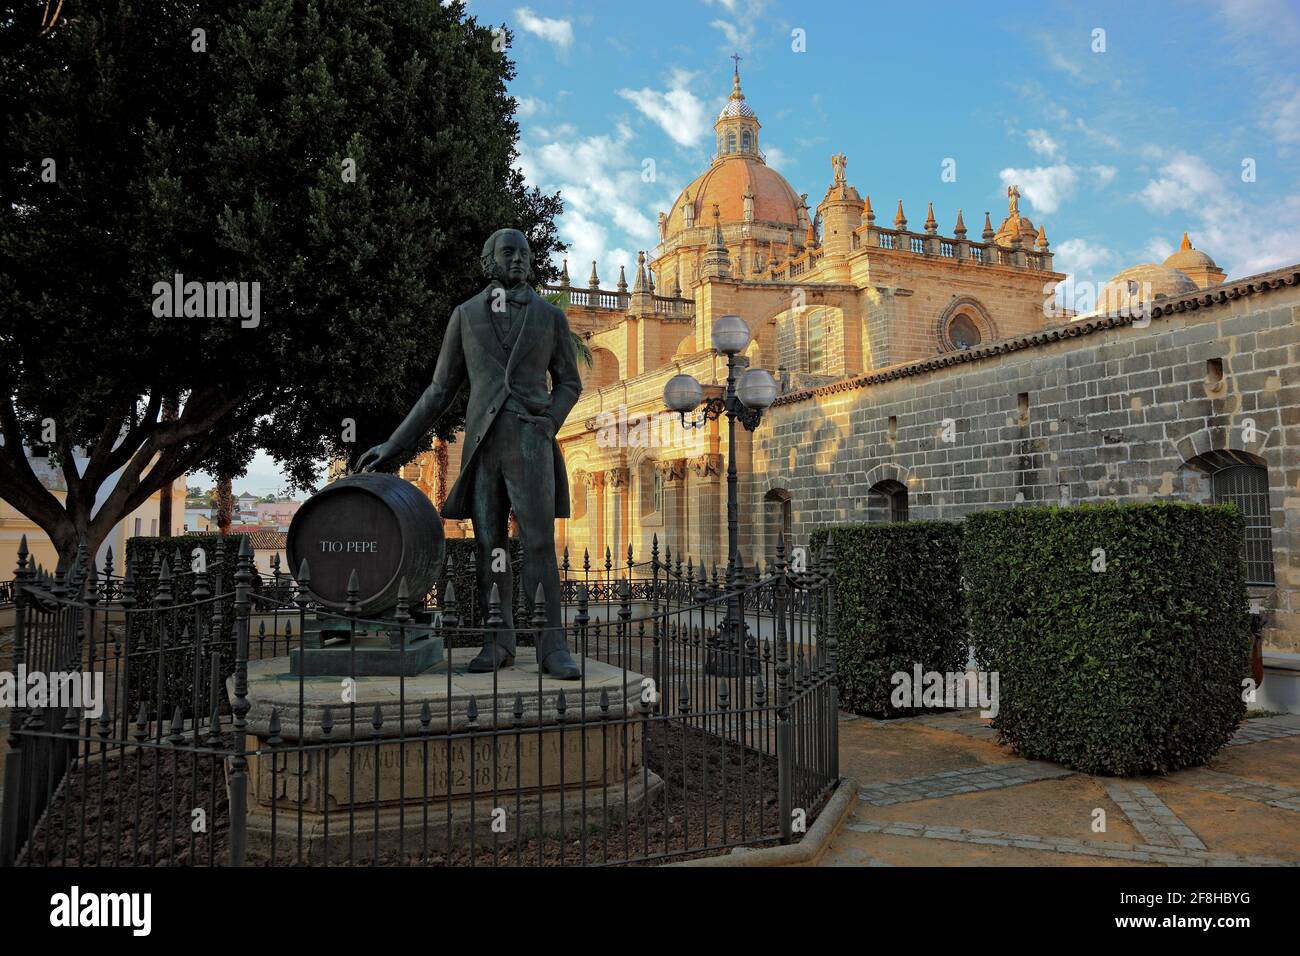 Spain, Andalusia, Jerez de la frontera in Cadiz province, Statue des Manuel Maria Gonzalez Angel, sherry cask Tio Pepe infront of the cathedral Antigu Stock Photo